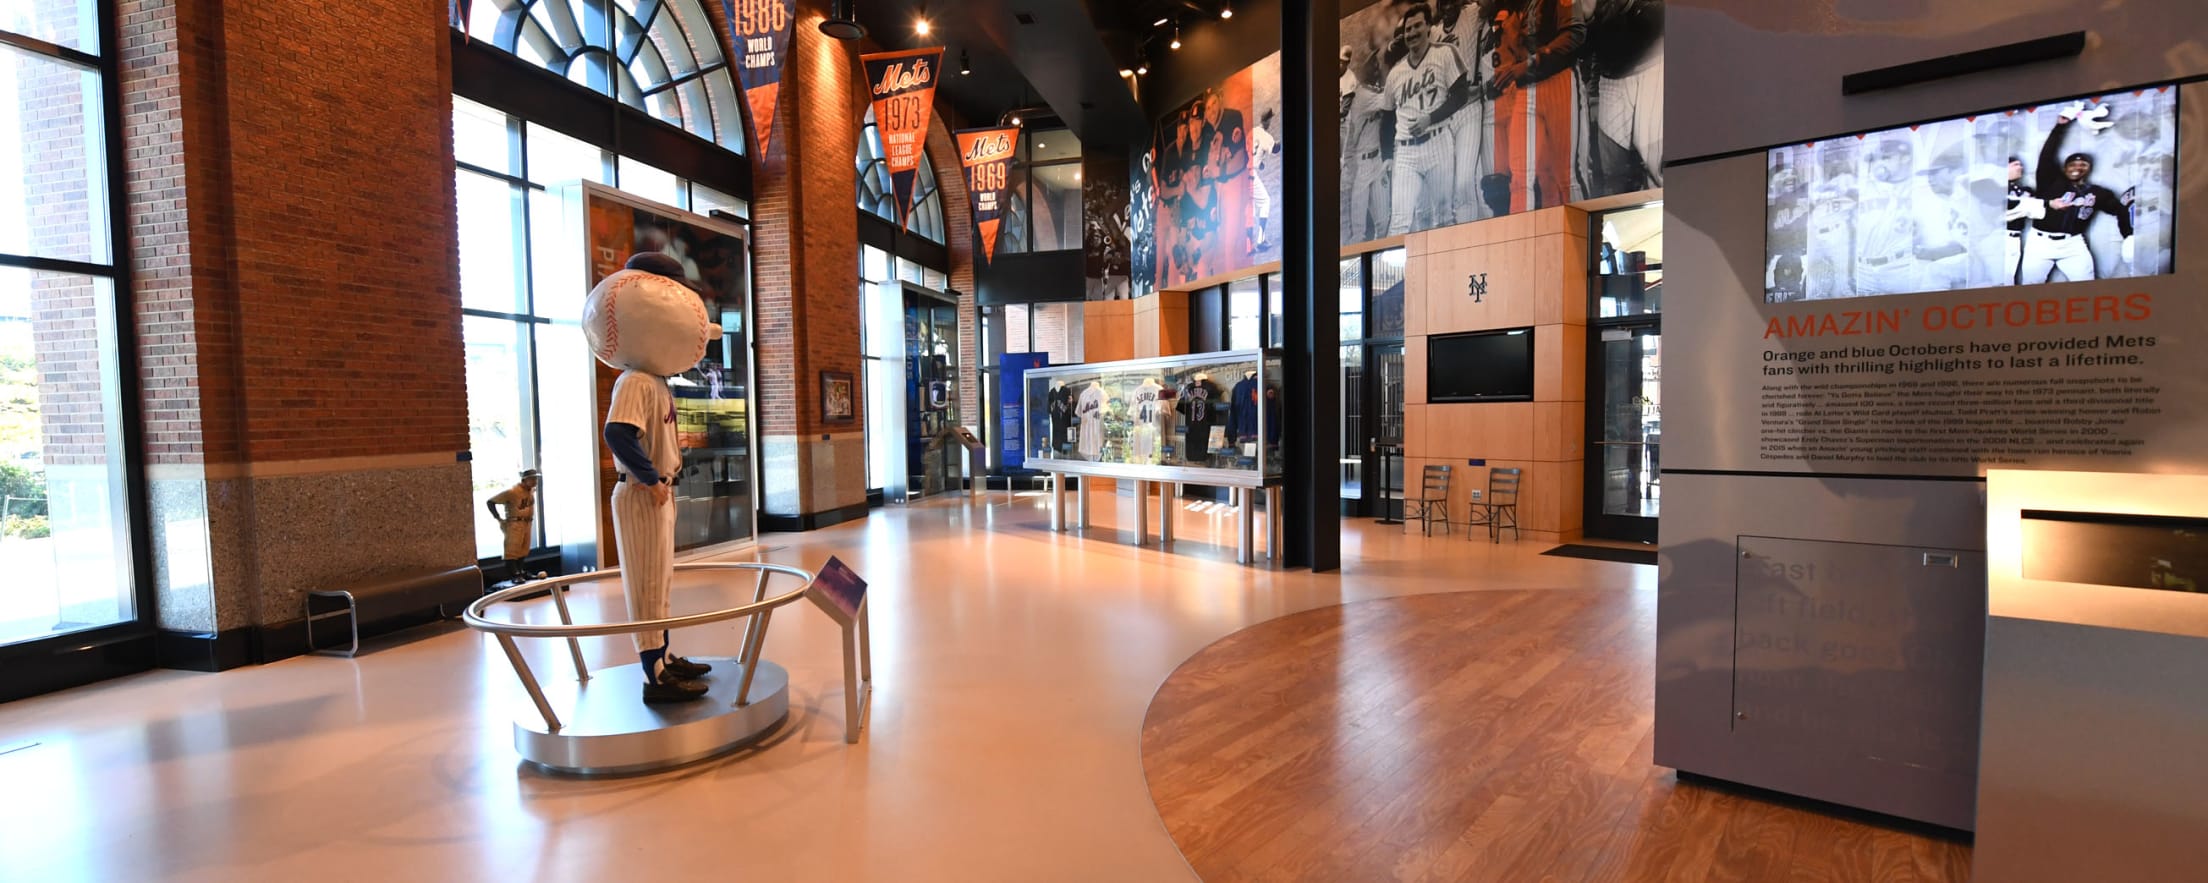 Mets Hall of Fame & Museum, Citi Fld, Flushing, NY, Transportation